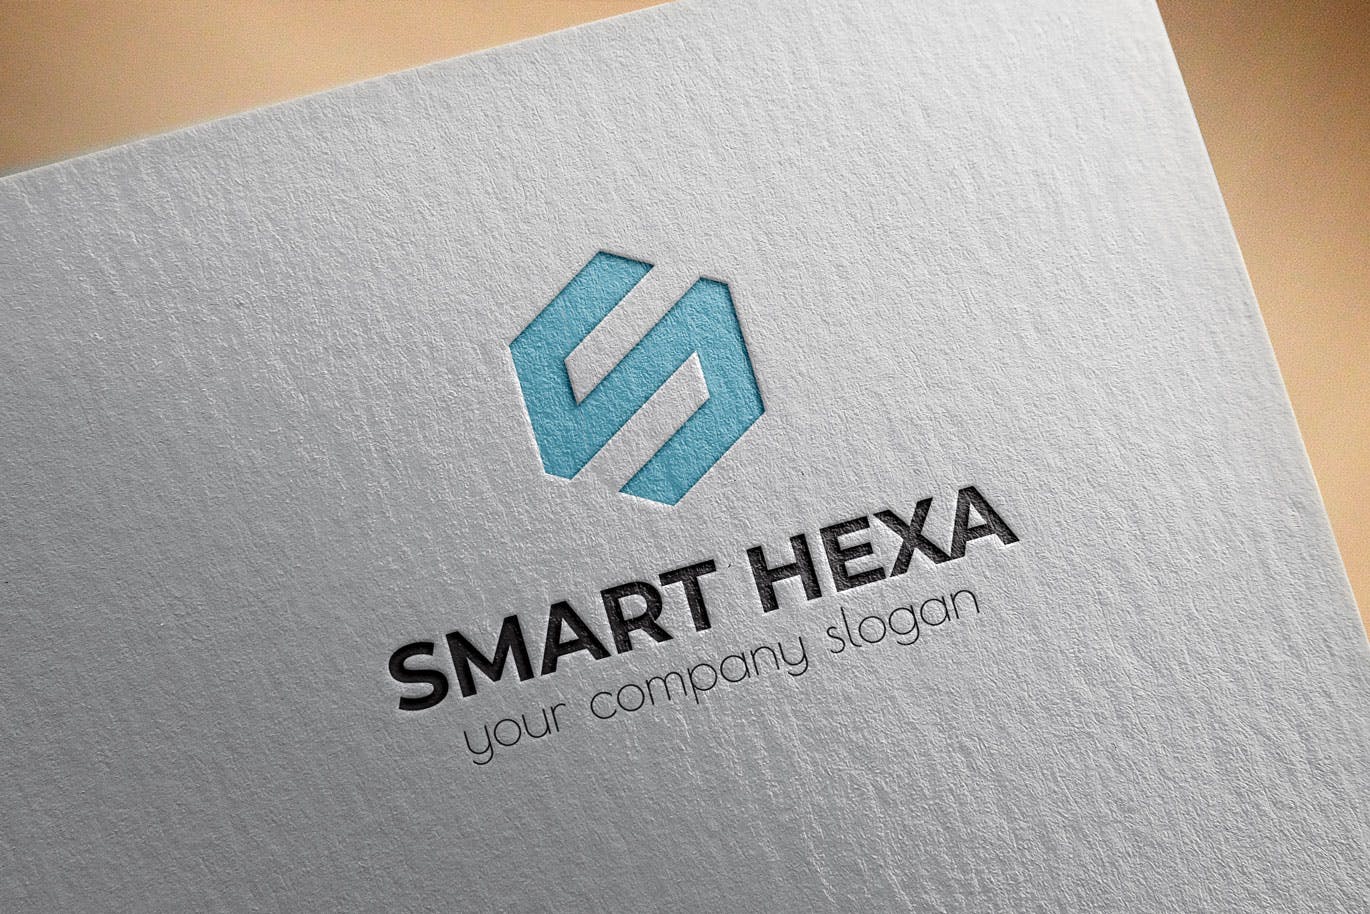 S字母图形Logo设计非凡图库精选模板 Smart Hexa Awesome Logo Template插图(2)